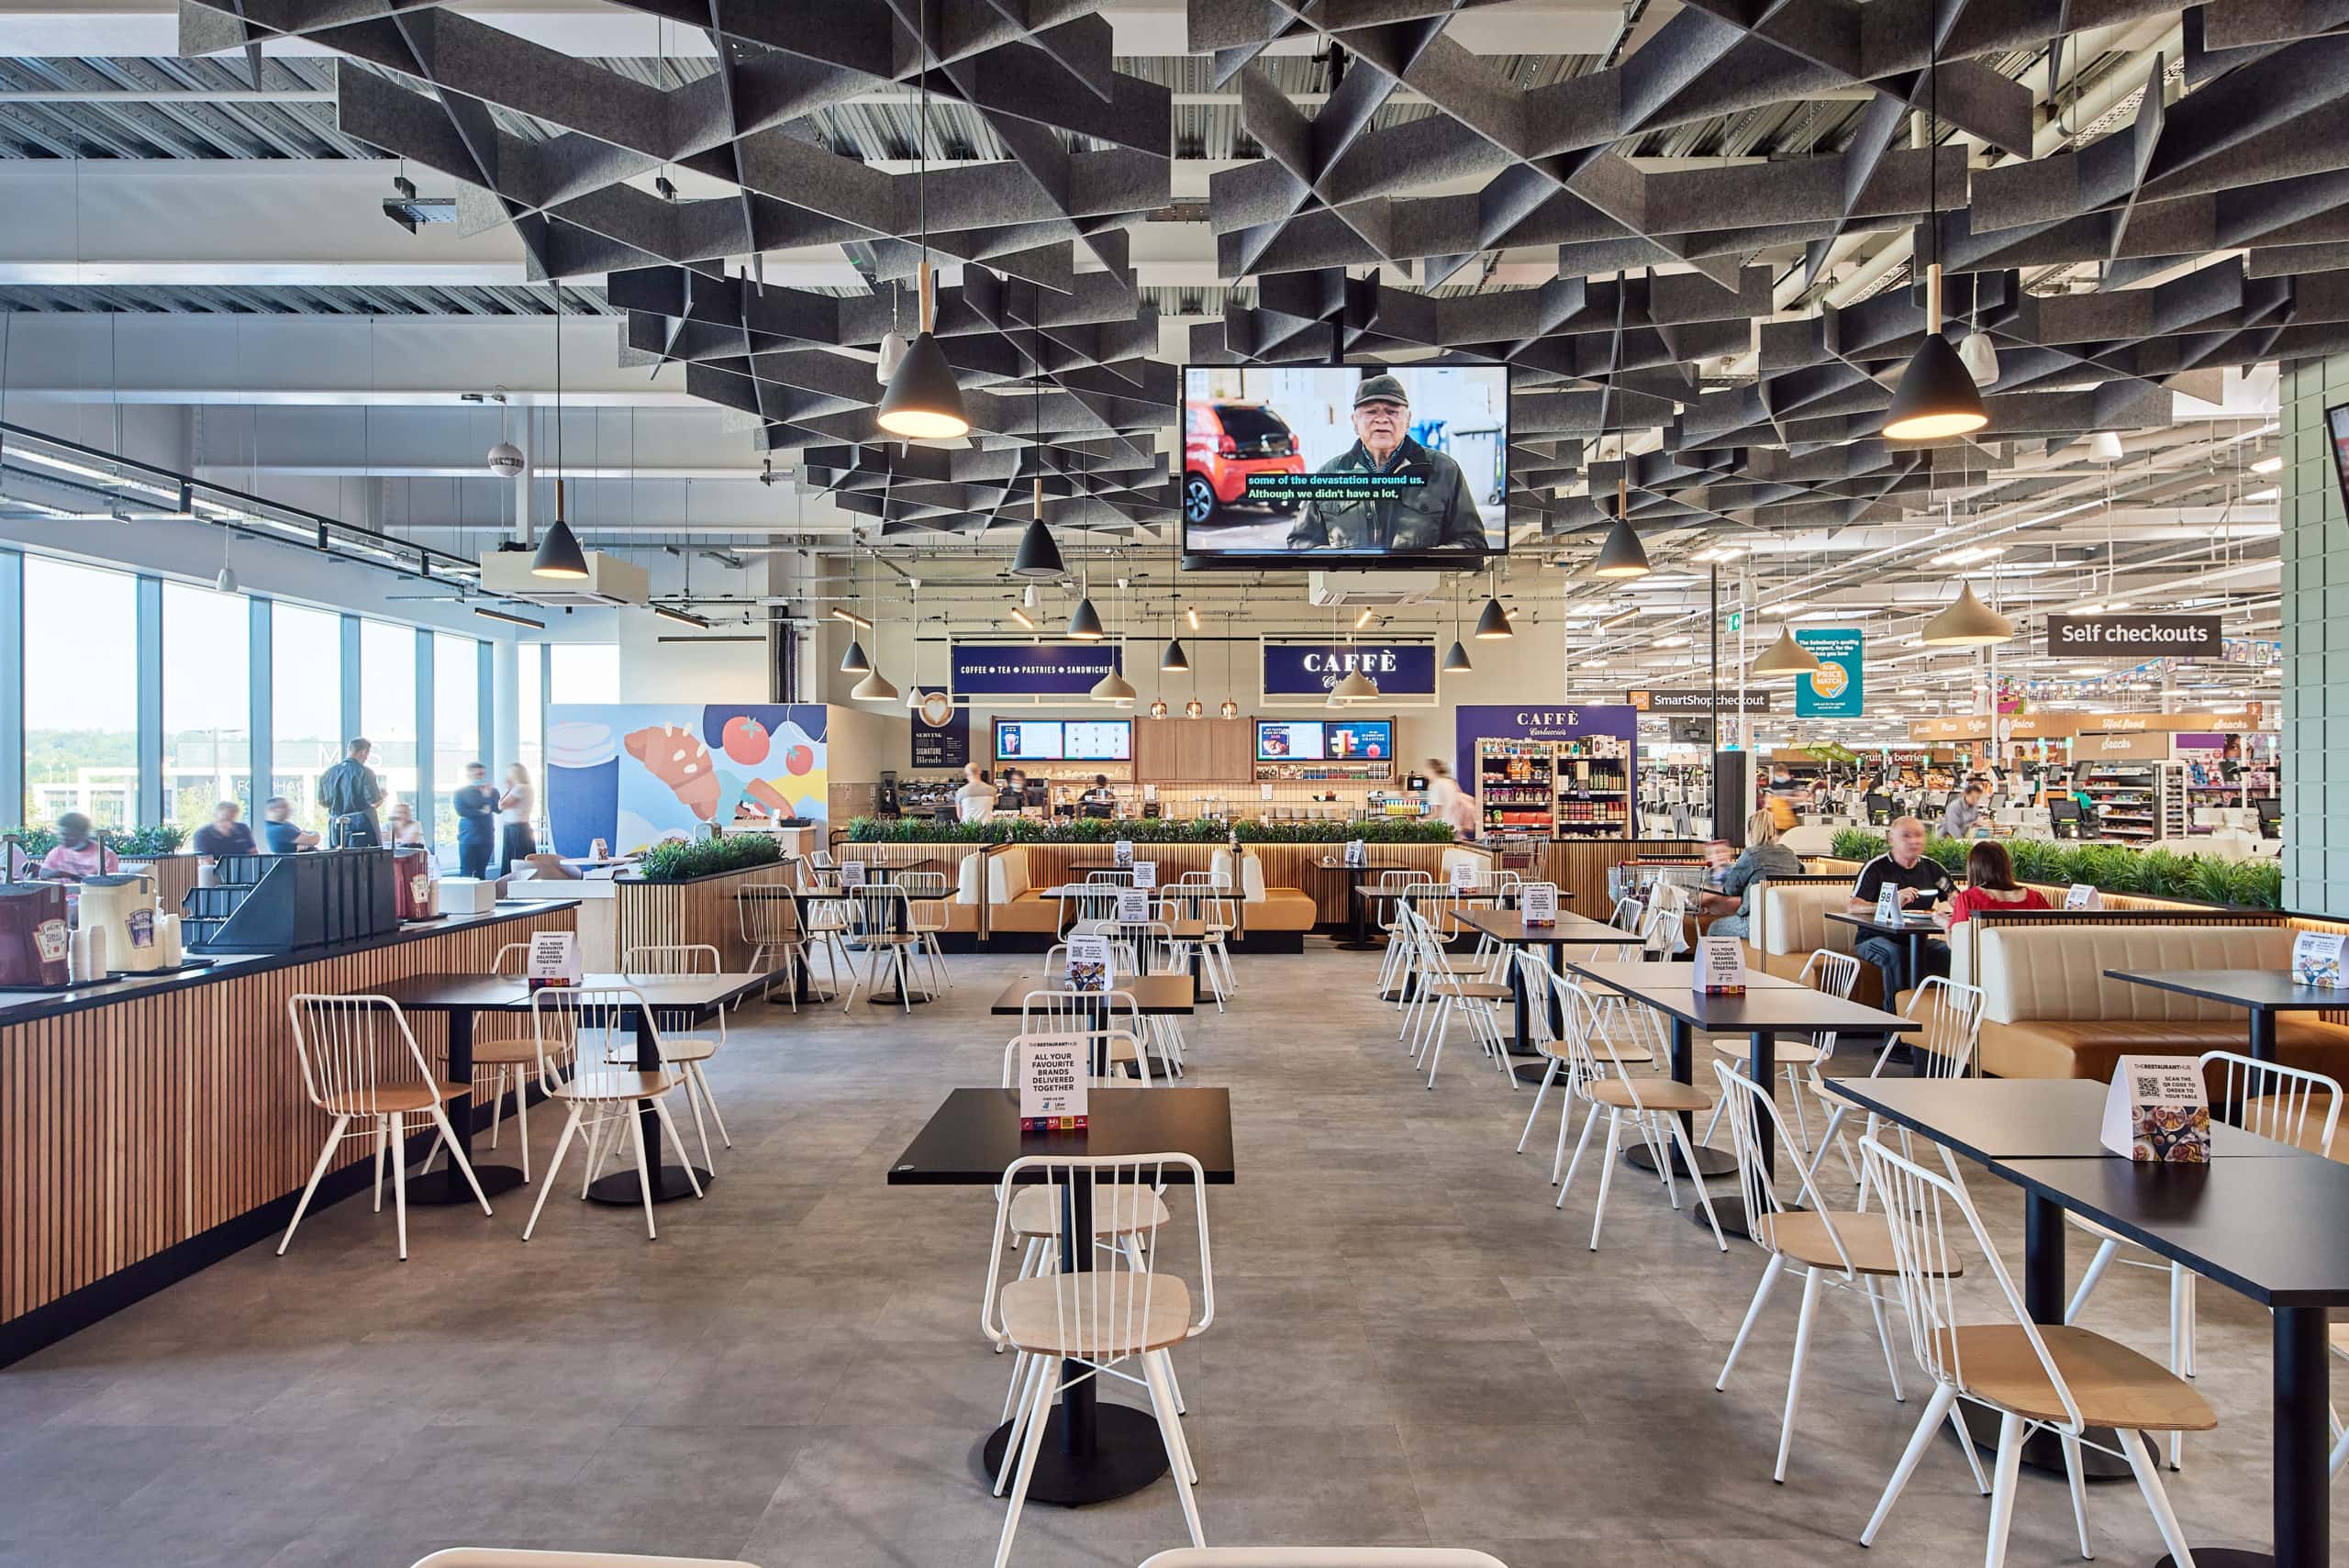 The Restaurant Hub Food Court